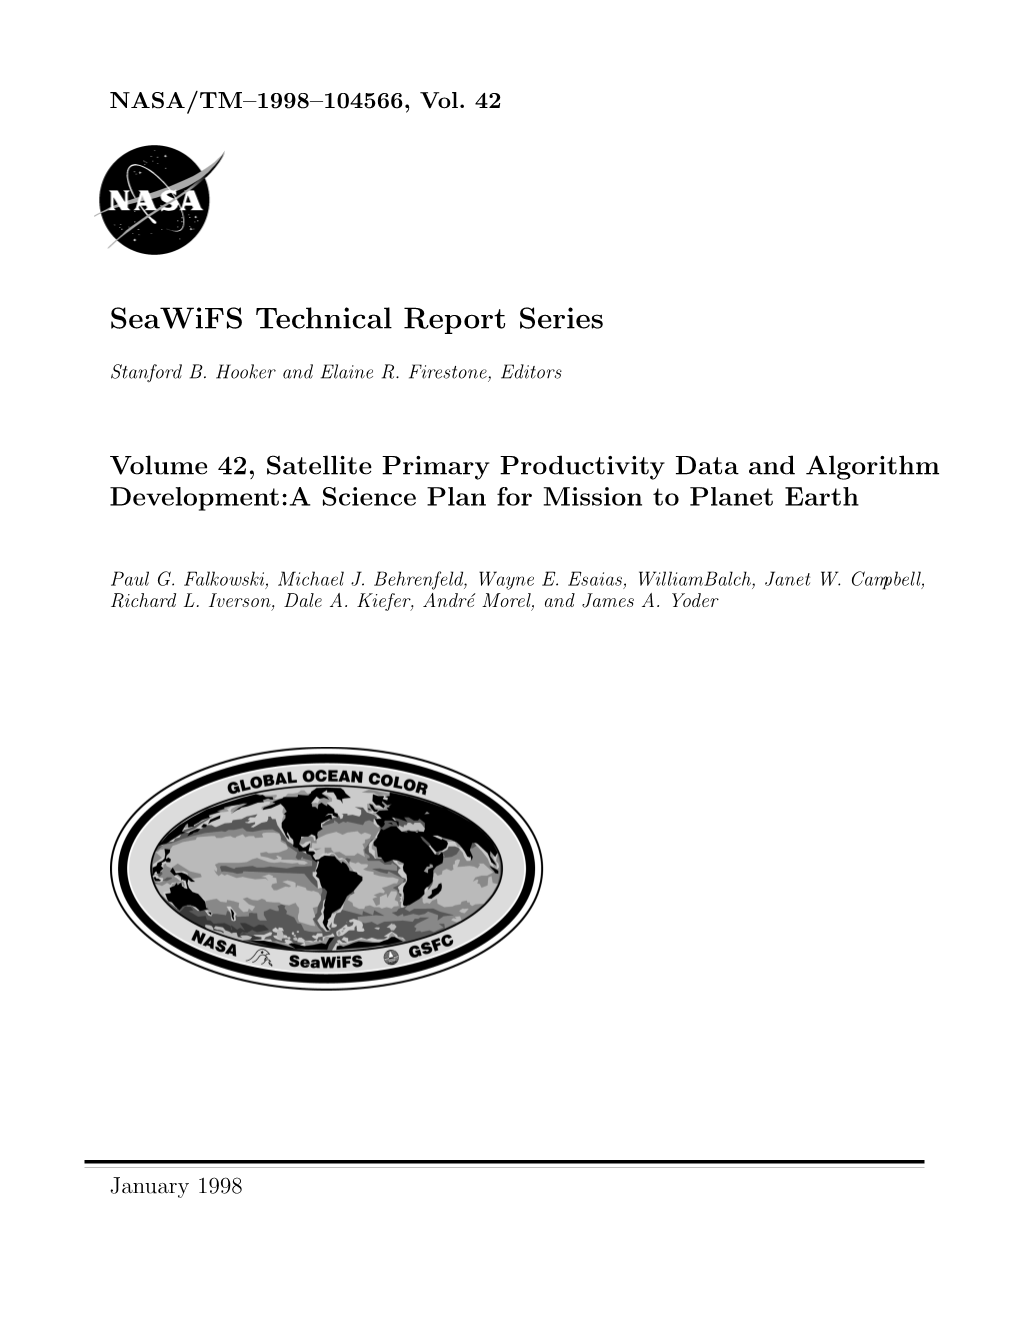 Seawifs Technical Report Series